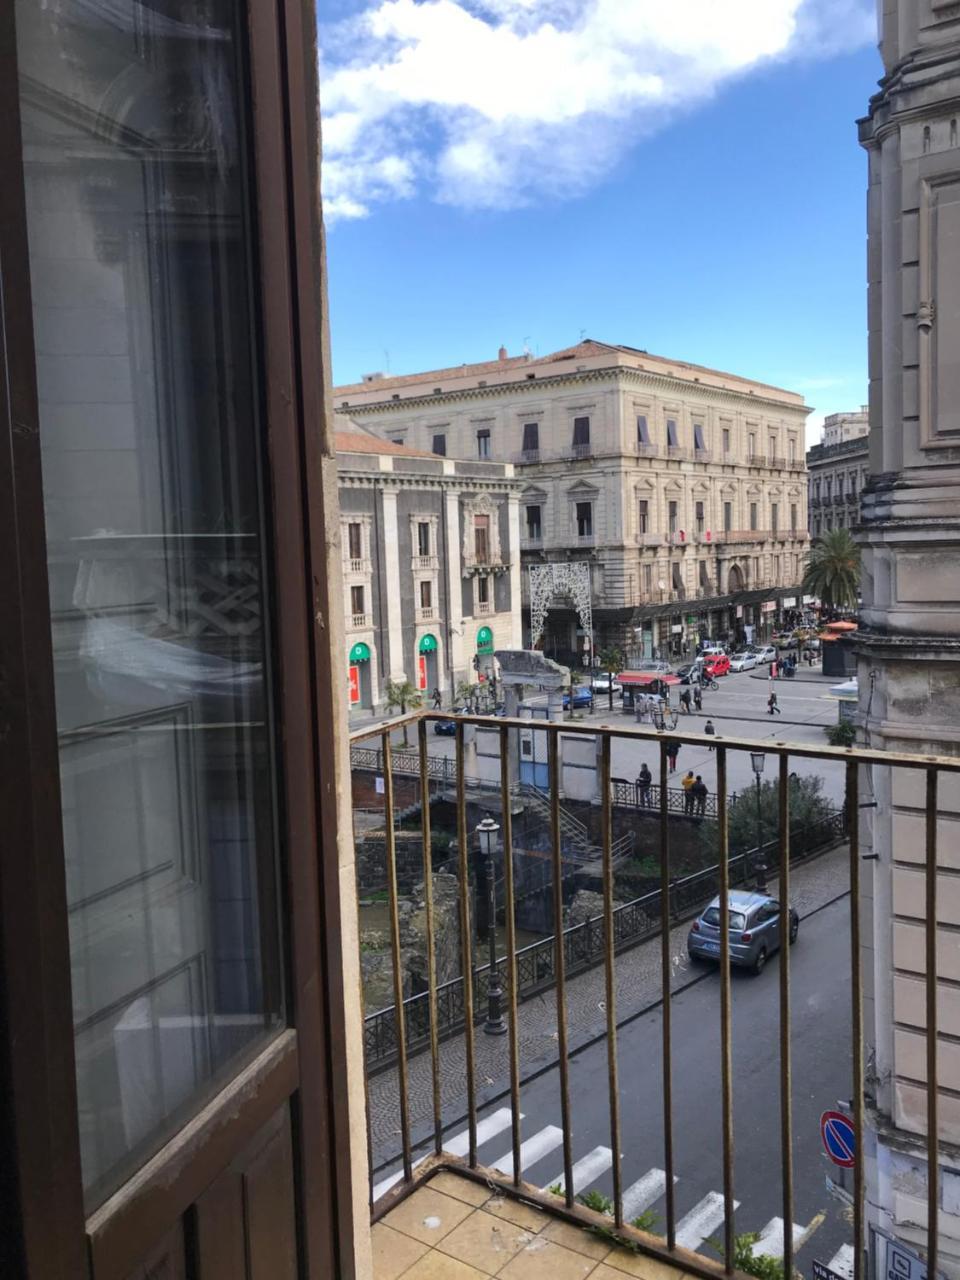 Agatha Cosy Hotel Catania Exterior foto